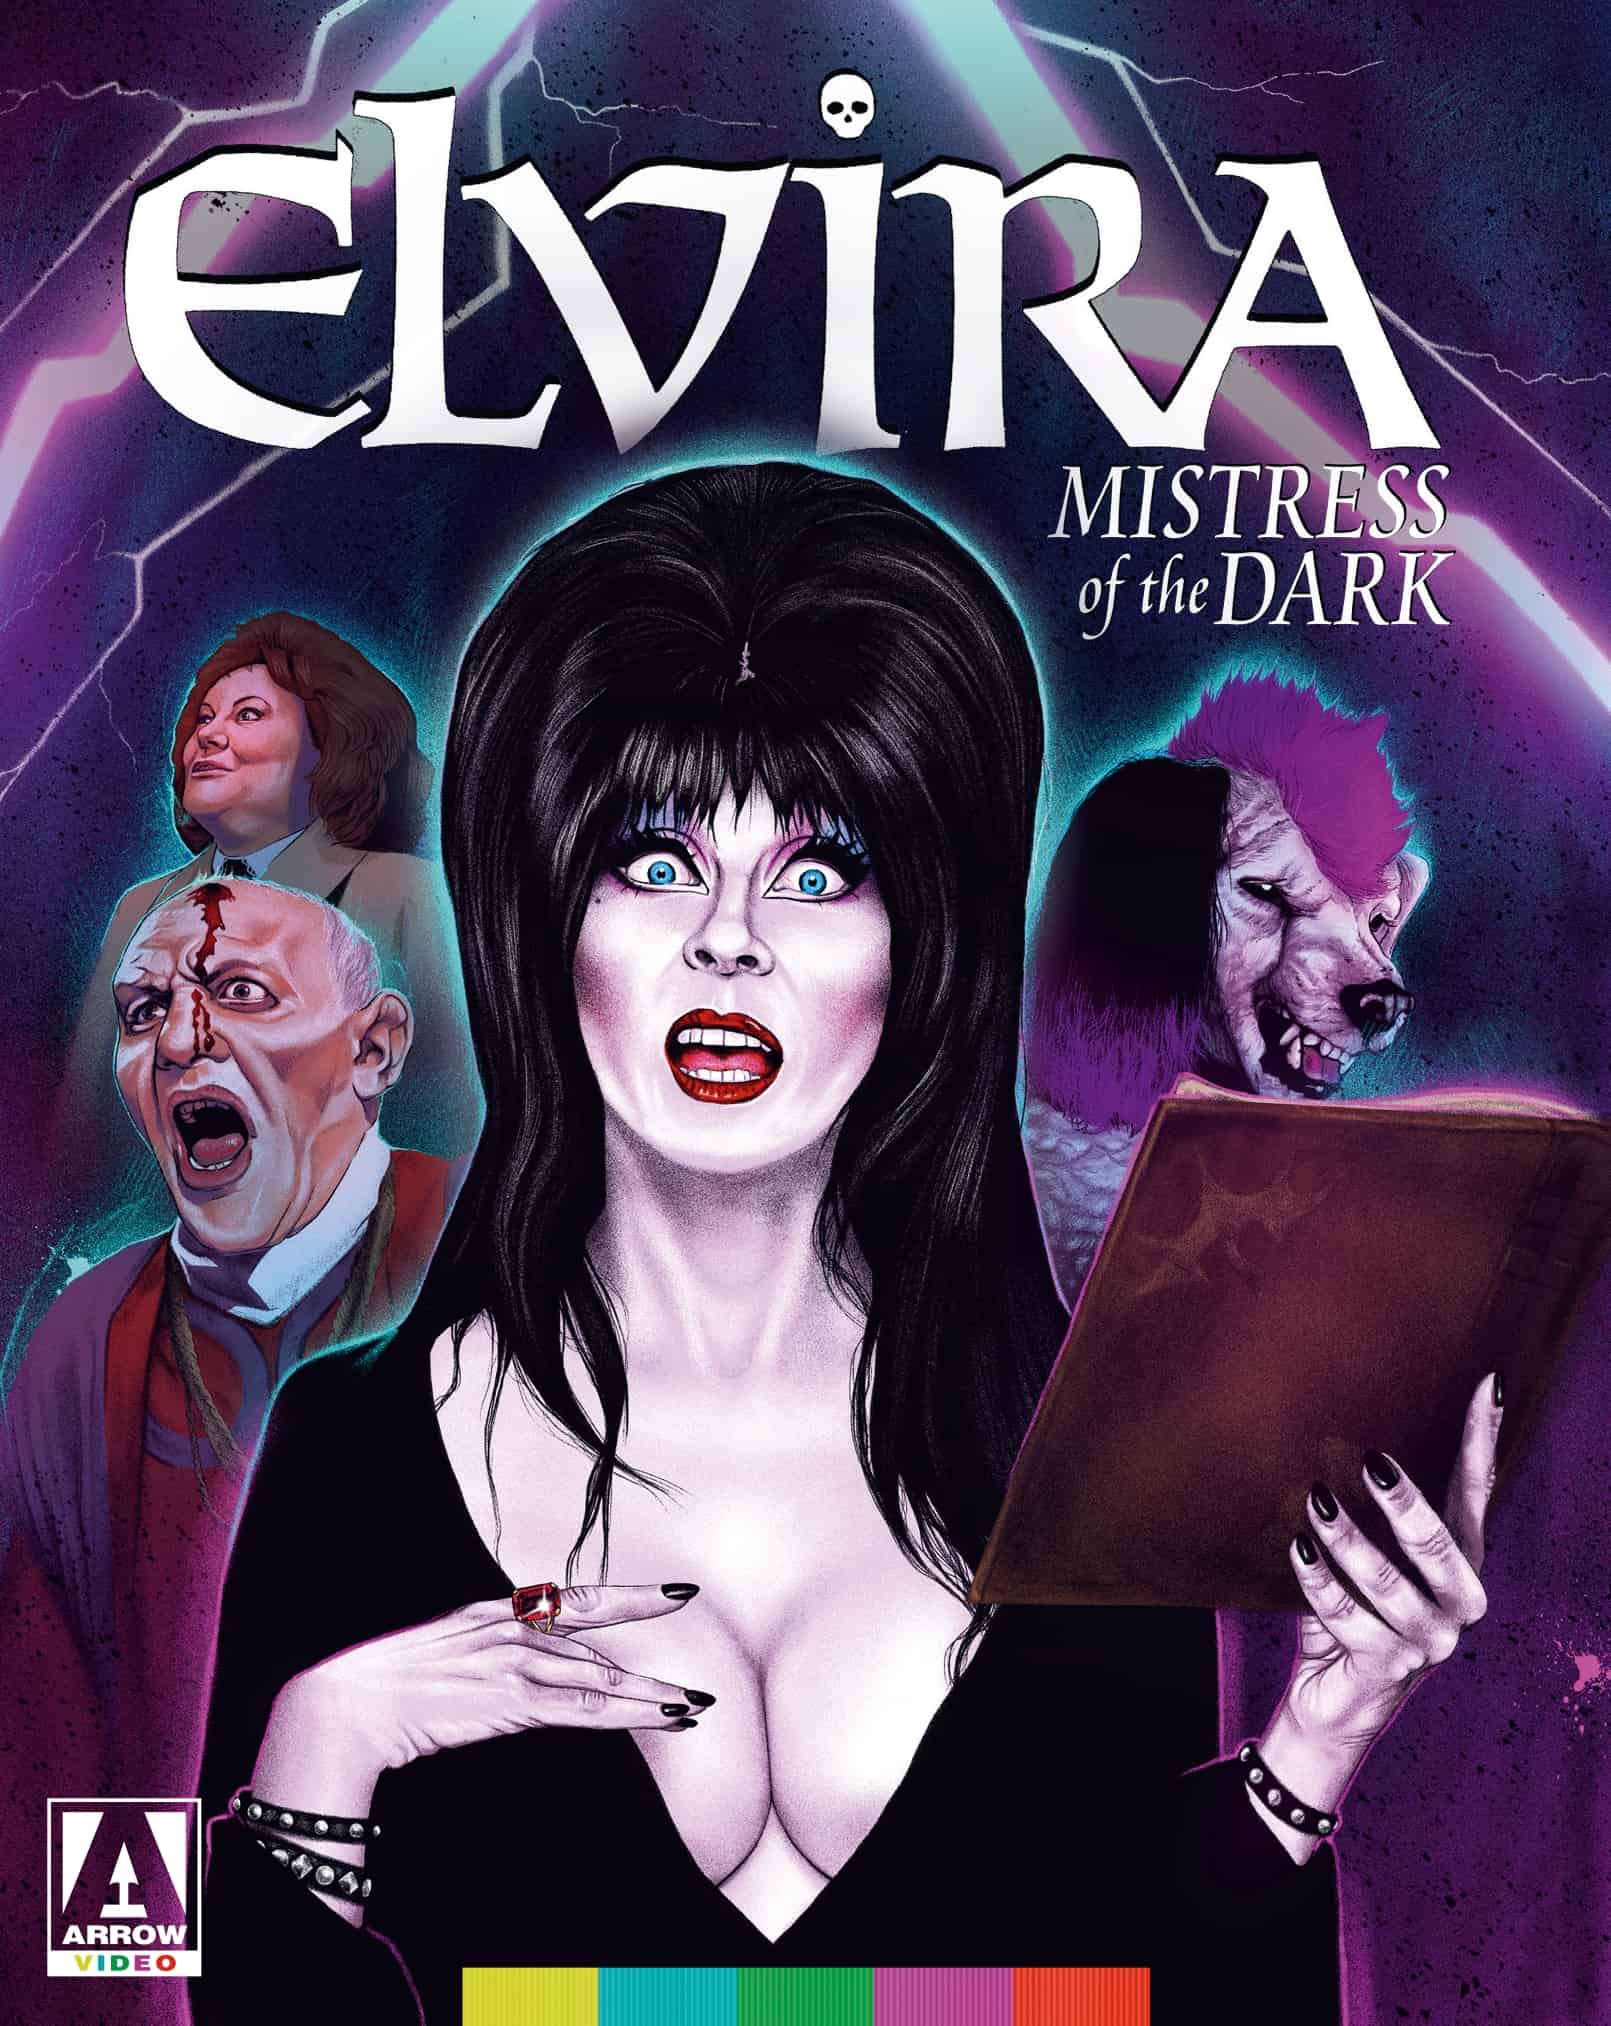 Elvira Mistress of the Dark Arrow Films 15 Blu-ray reviews